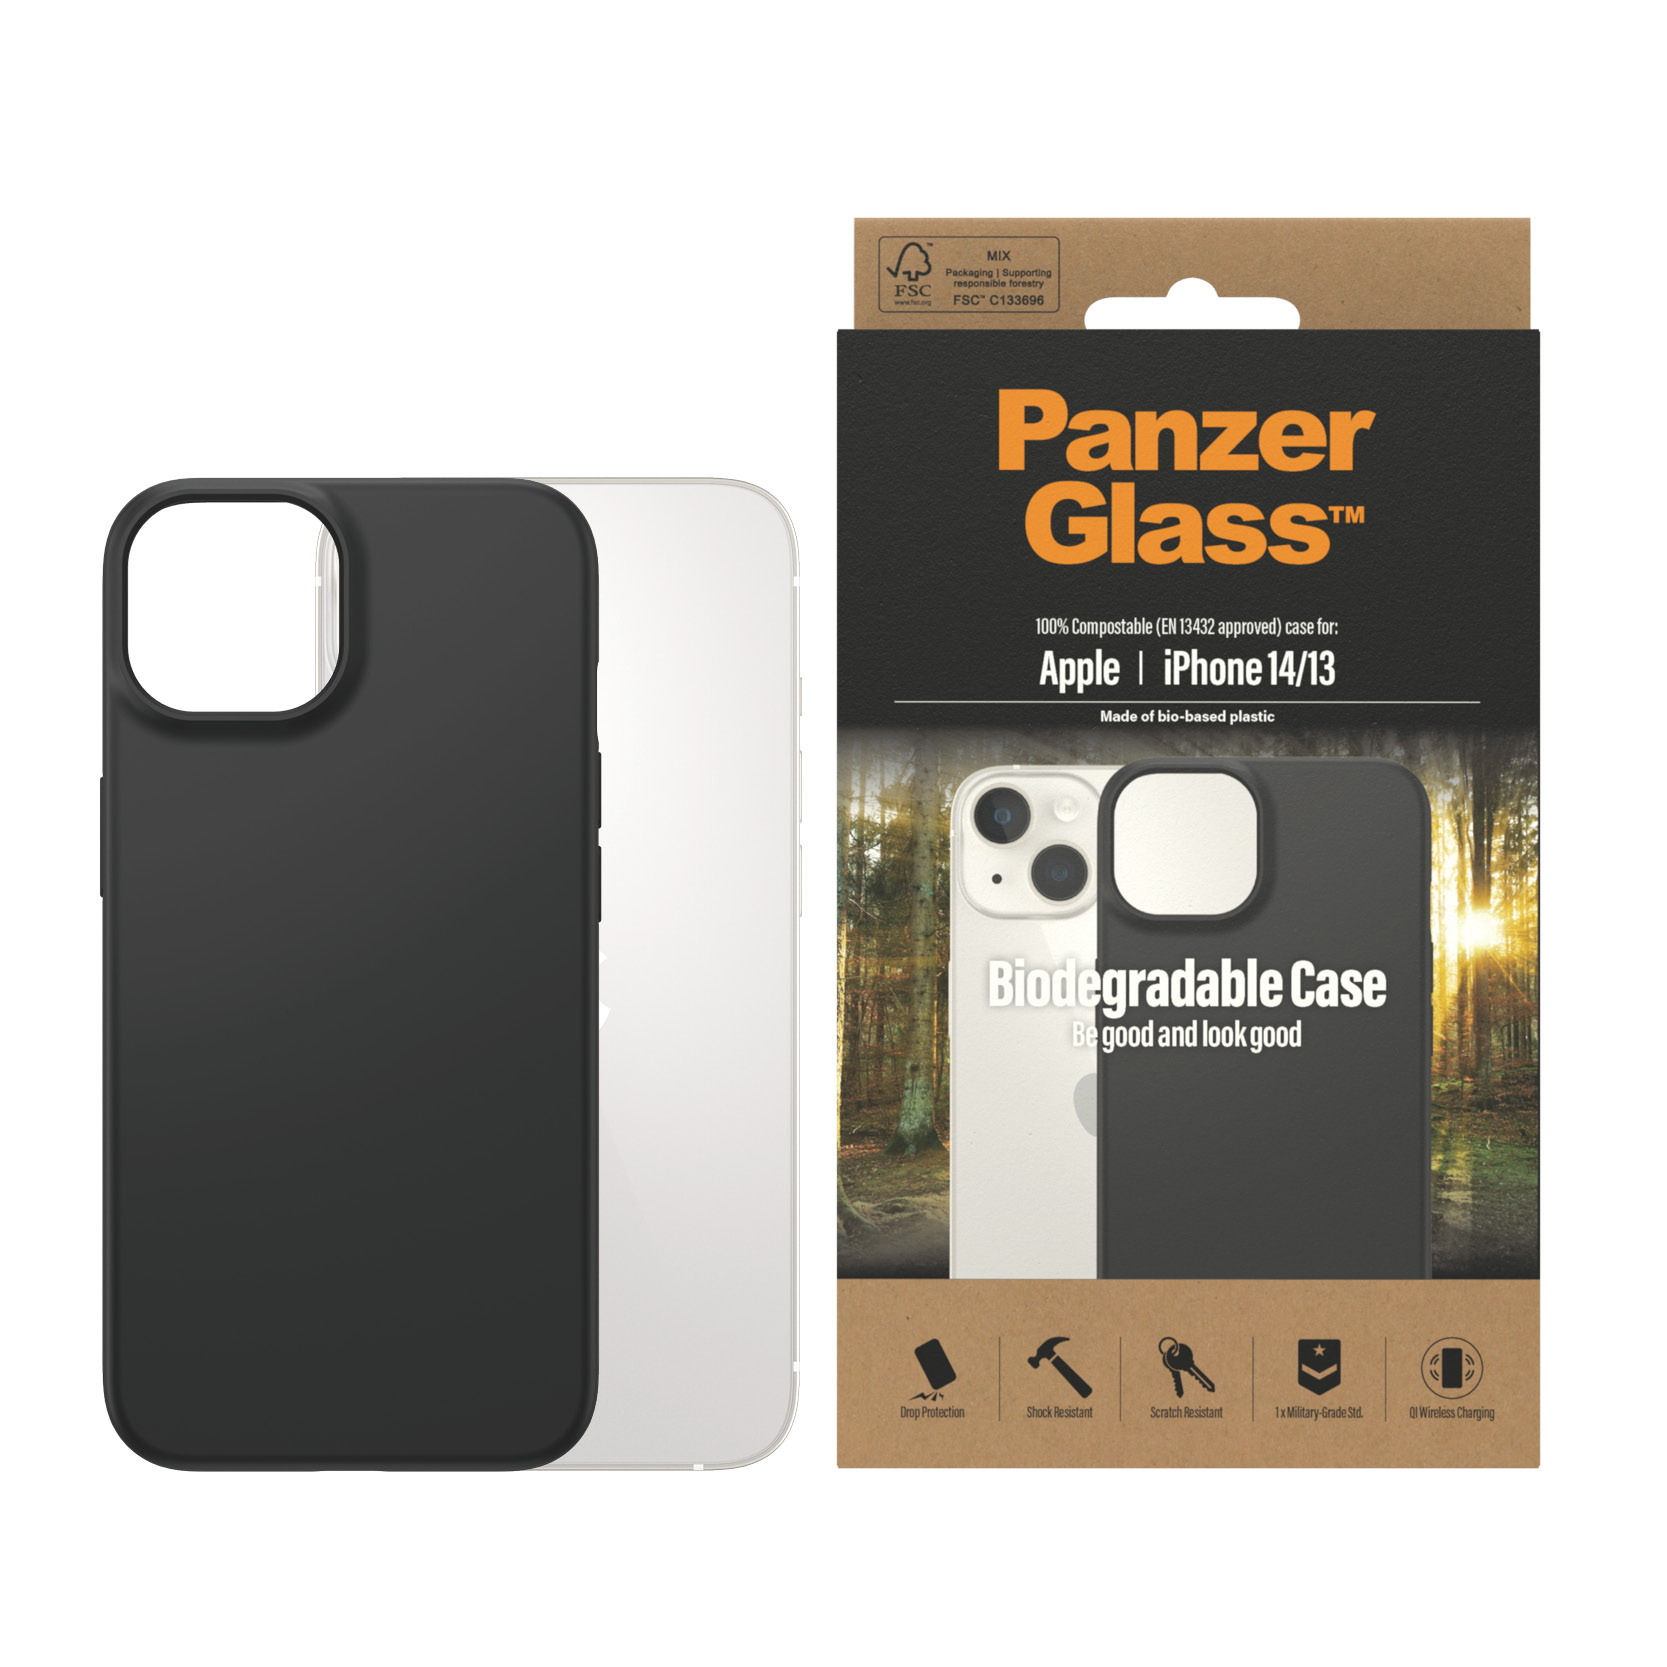 PanzerGlasstm Biodegradabil Apple iPhone 14 | 13 | Negru thumb